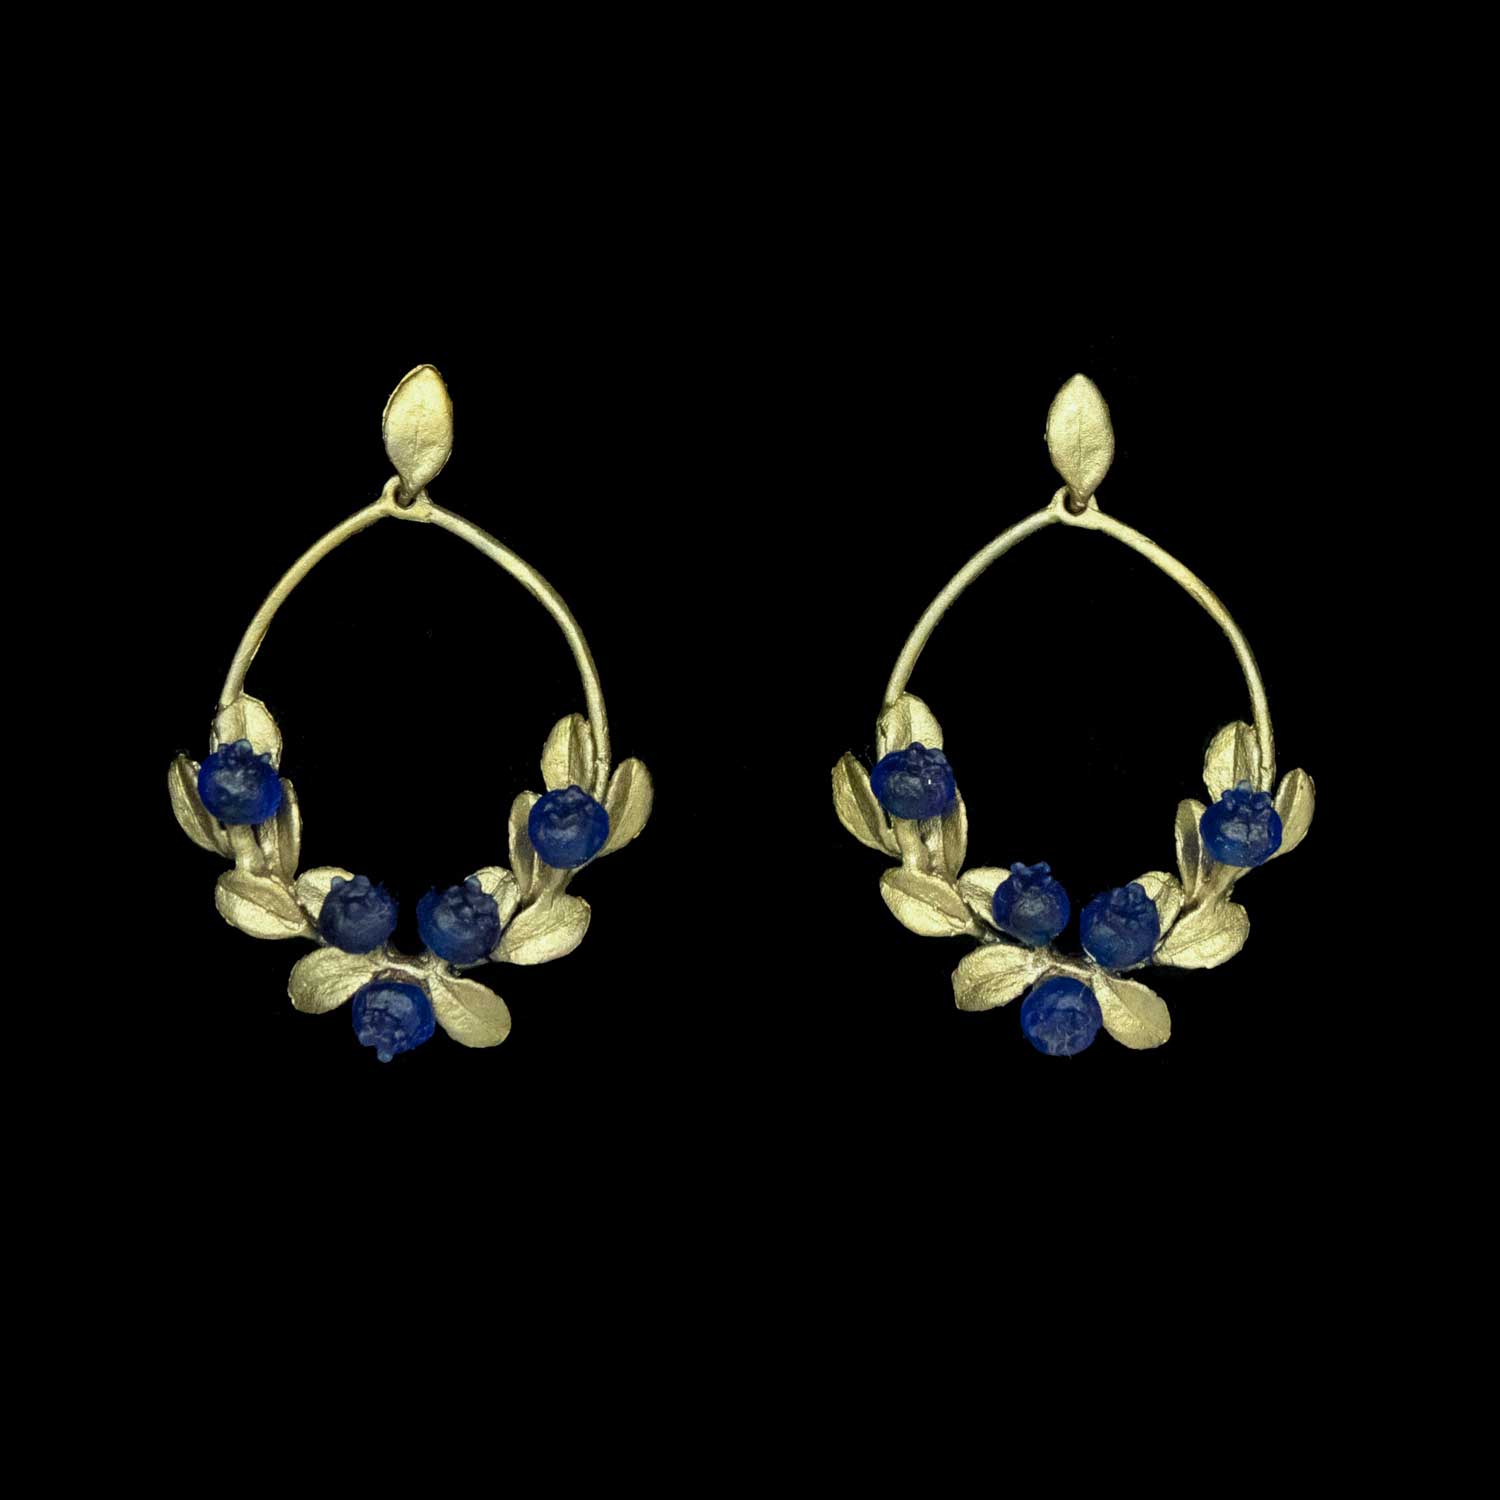 Petite Blueberry Earrings - Oval Post